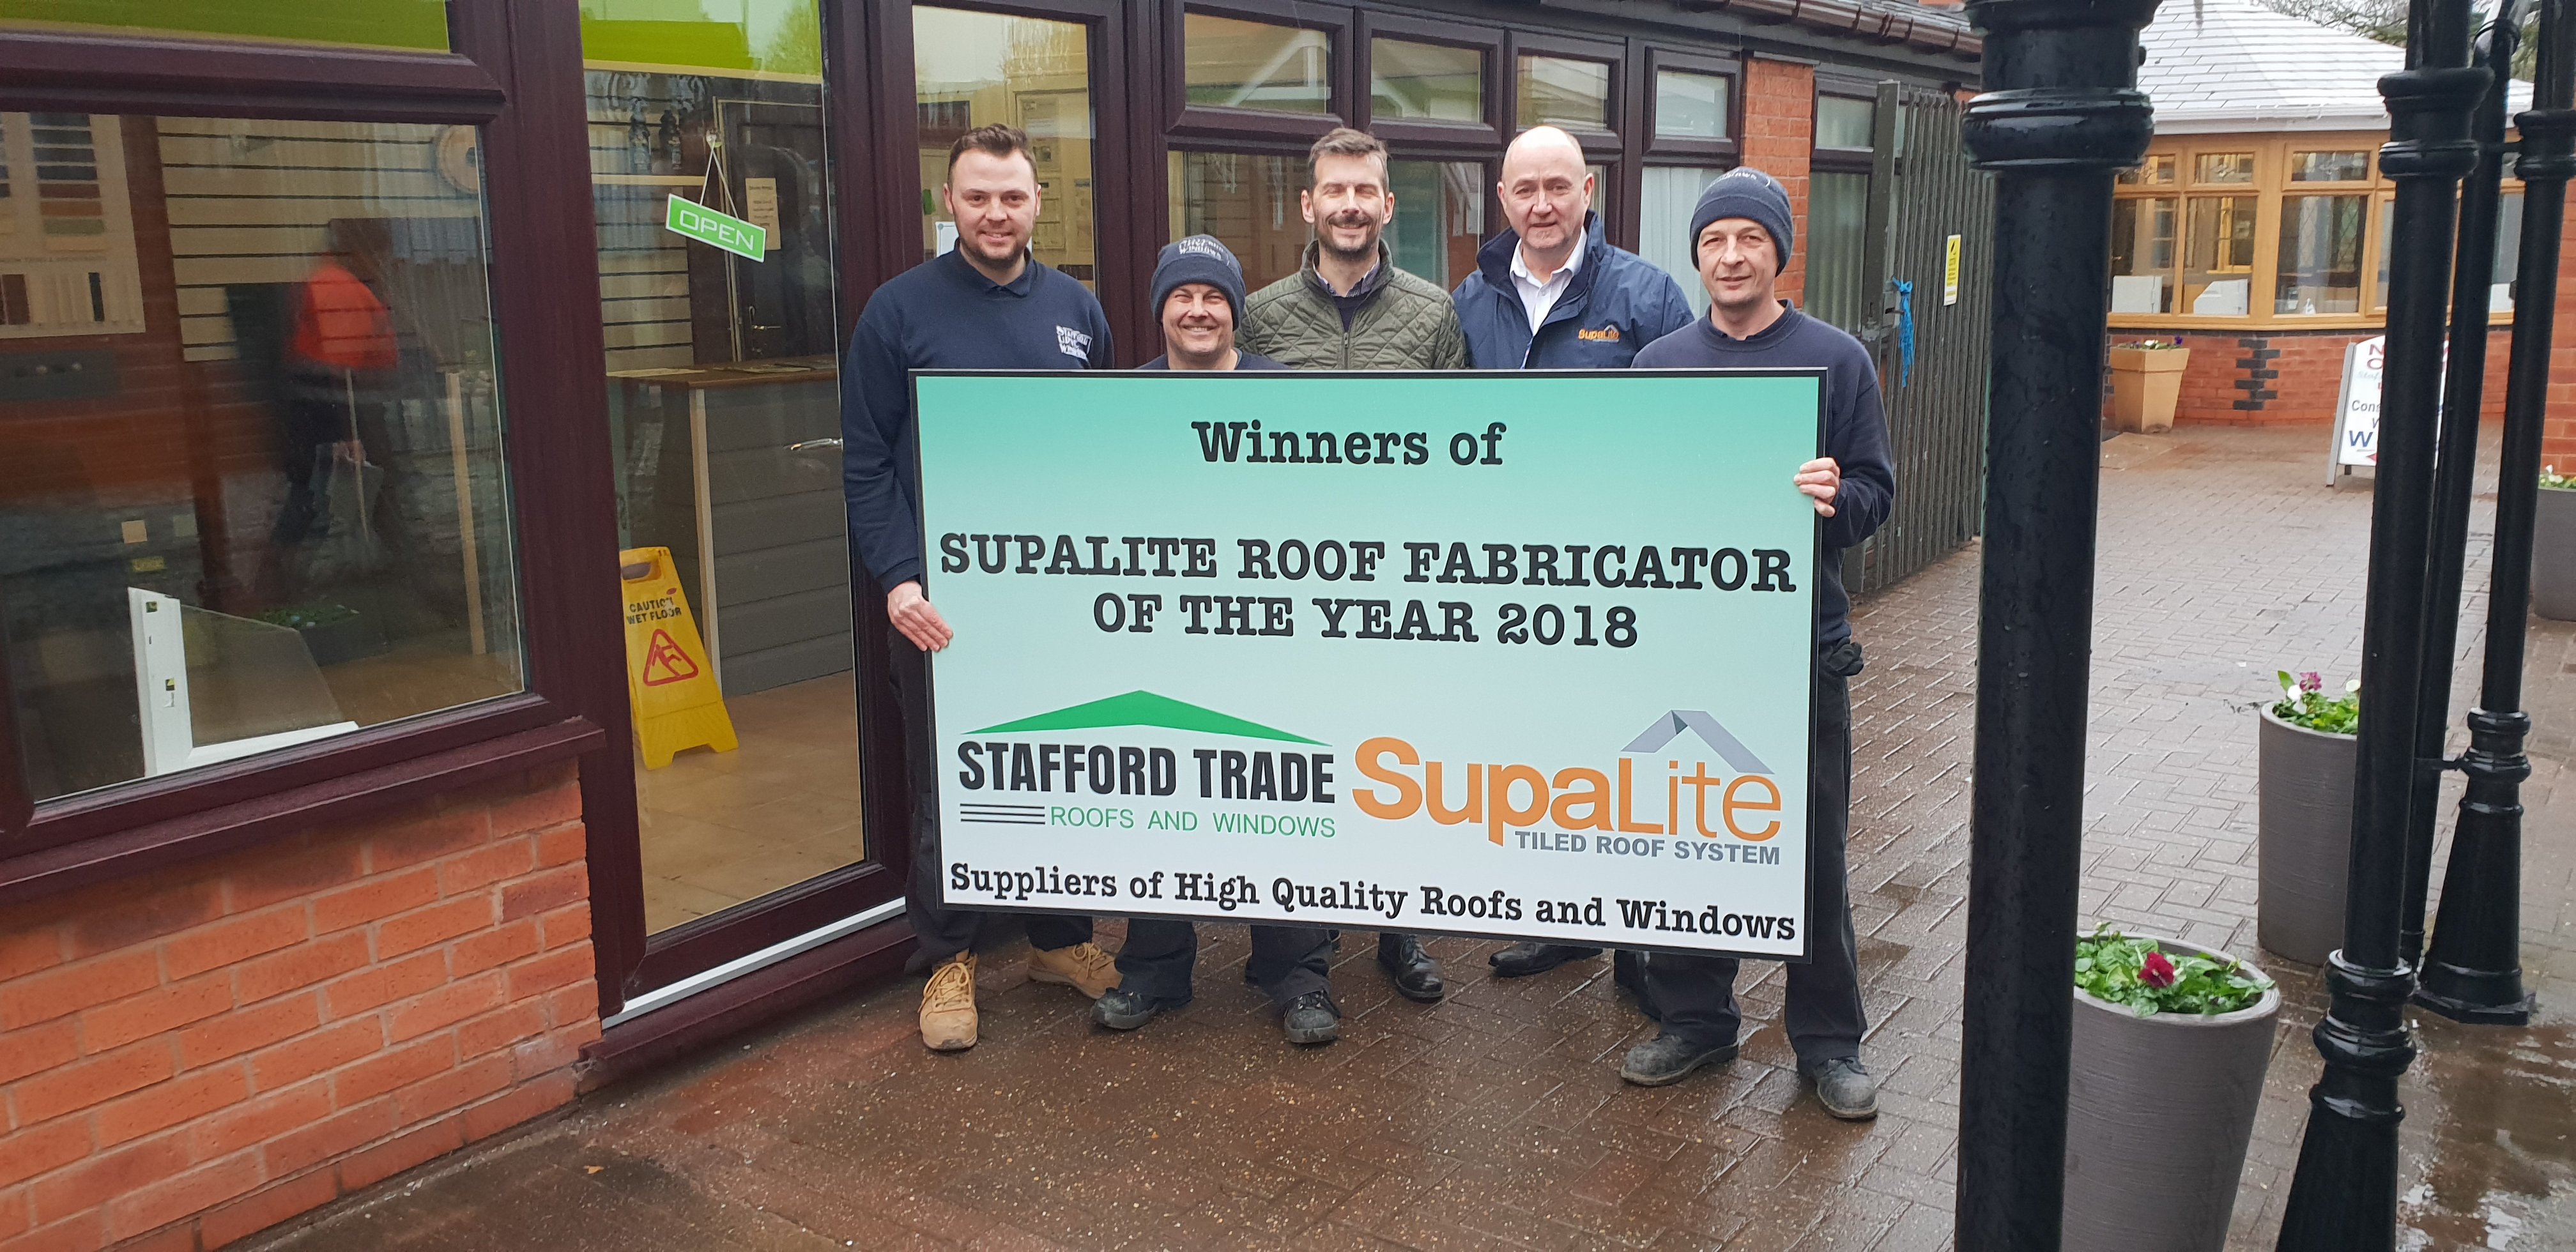 SupaLite Roof Fabricator of the Year 2018